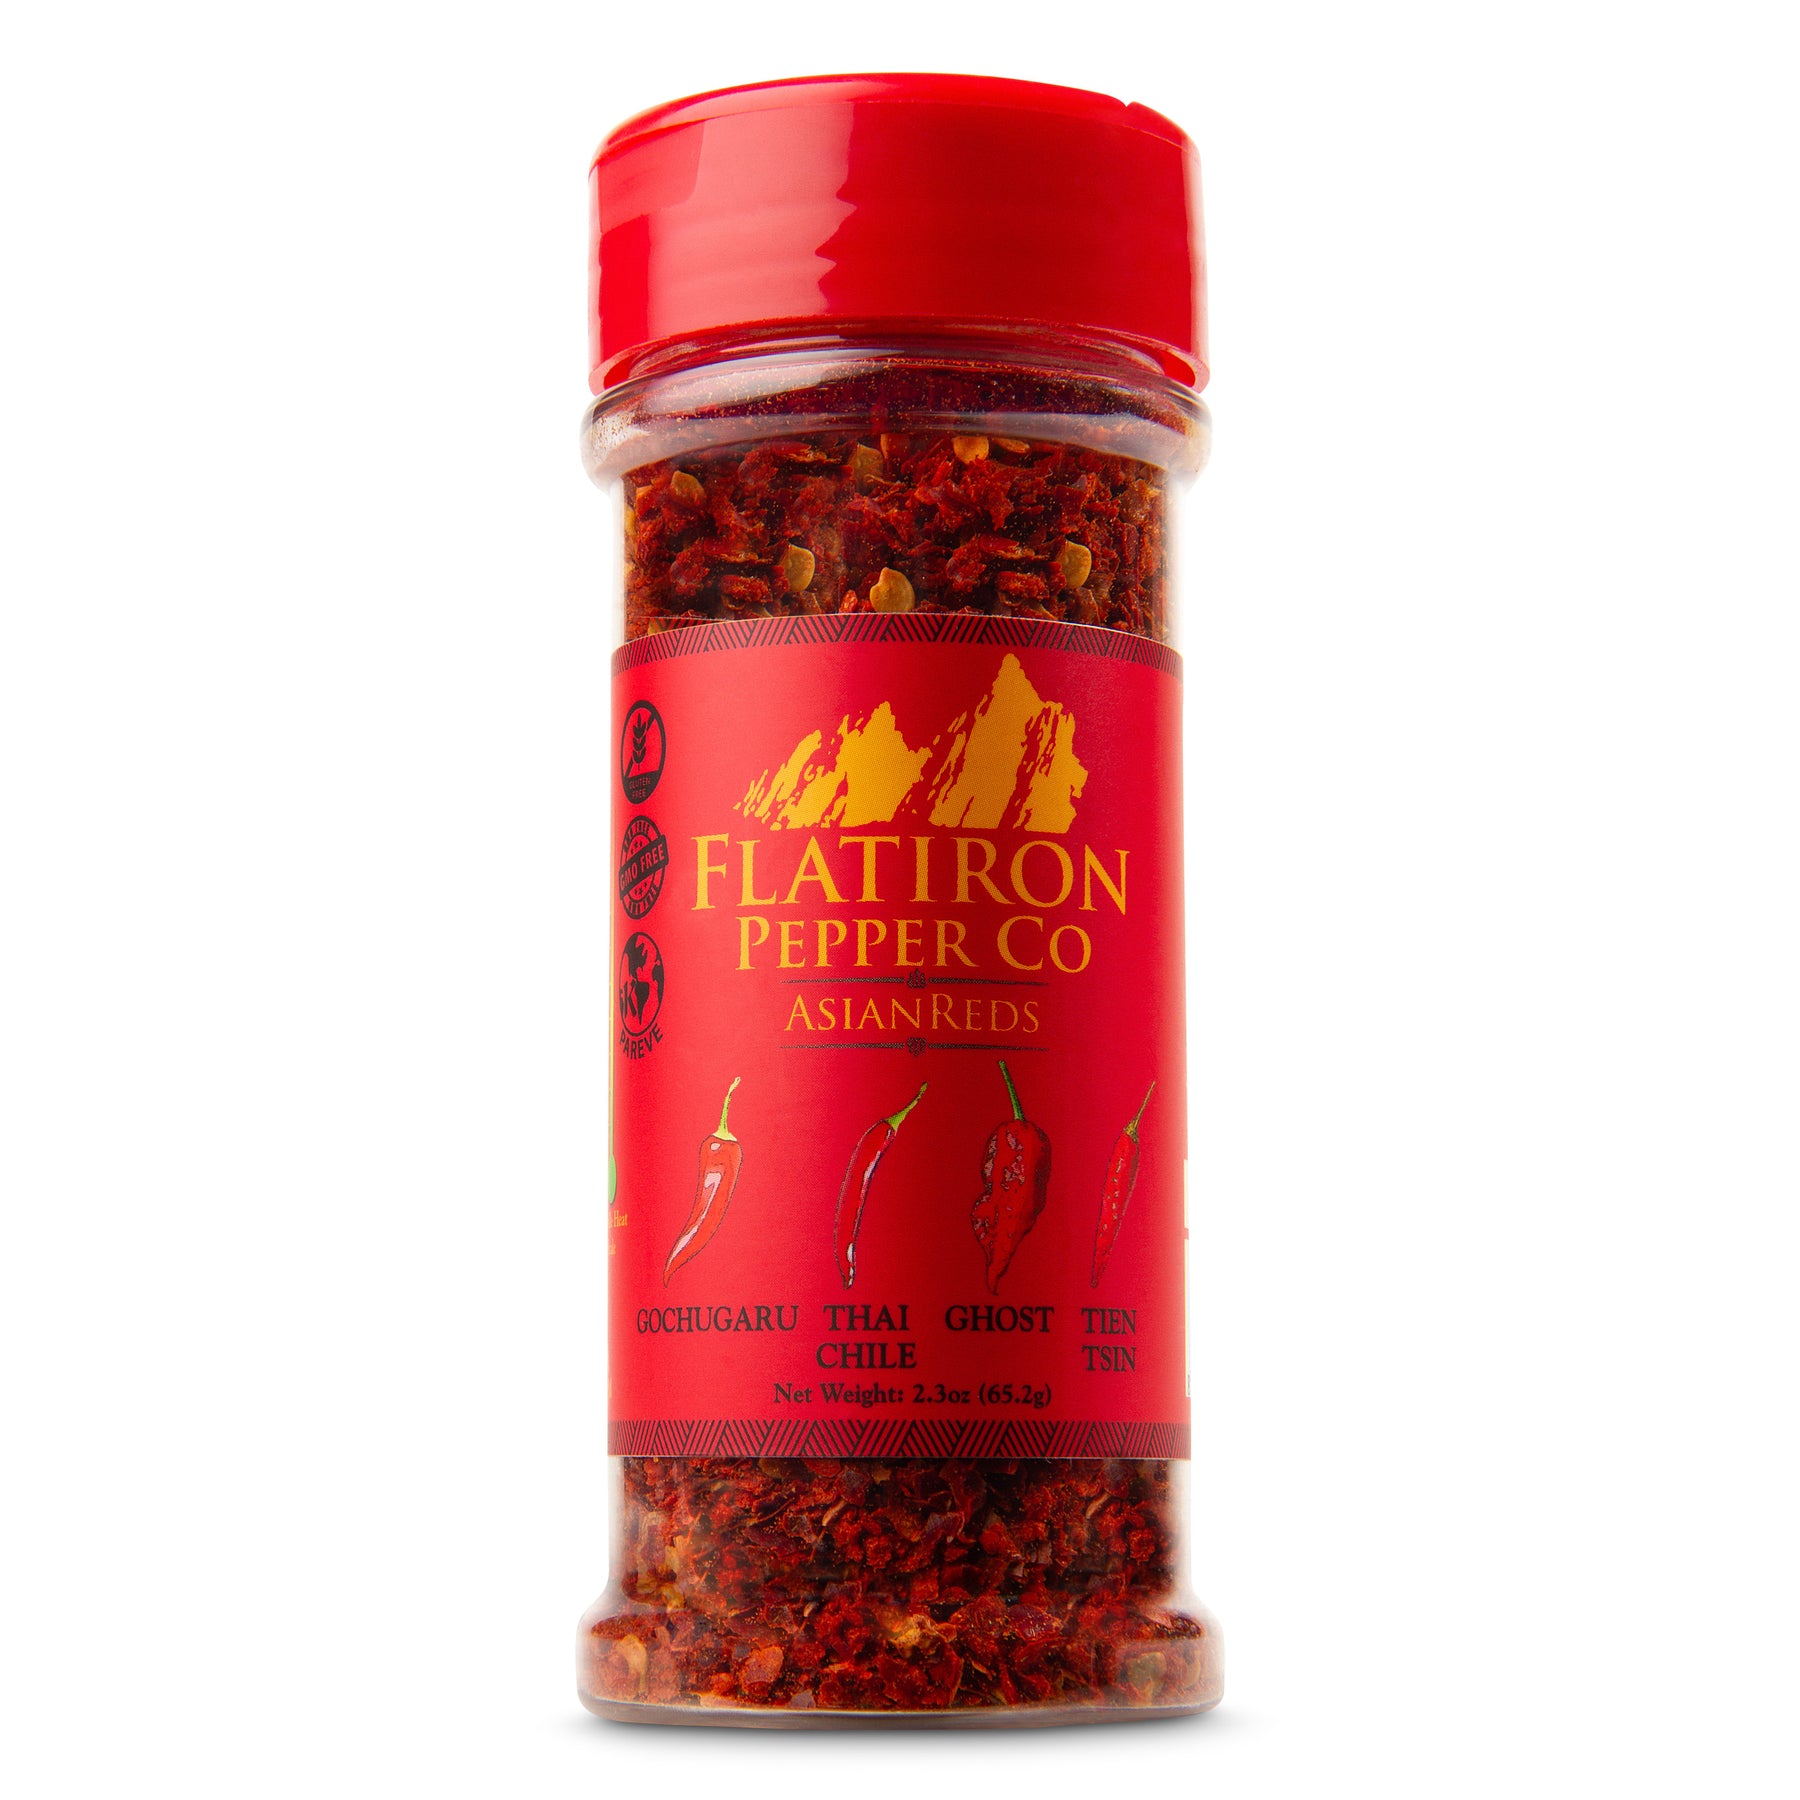 Flatiron Pepper Company Sweet Heat Blend